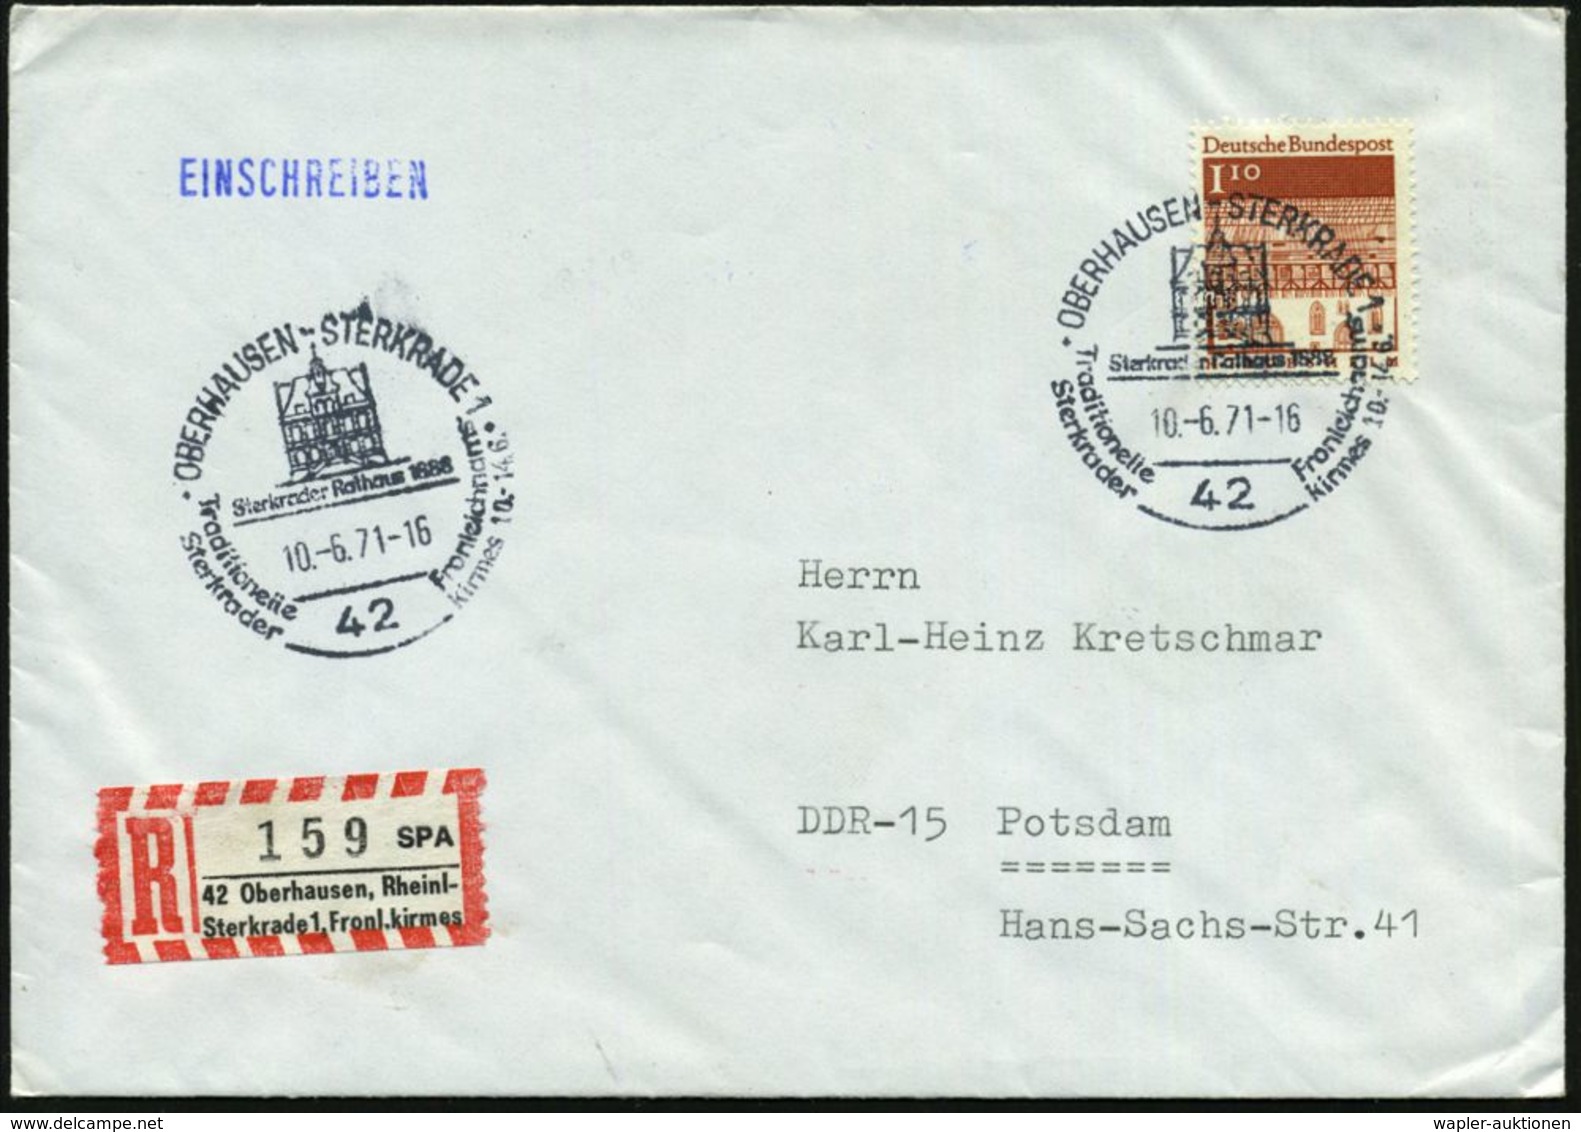 WALLFAHRT / PILGER : 42 OBERHAUSEN-STERKRADE 1/ Fronleichnams-/ Kirmes 1971 (10.6.) SSt + Sonder-RZ: SPA/42 Oberhausen,  - Christentum